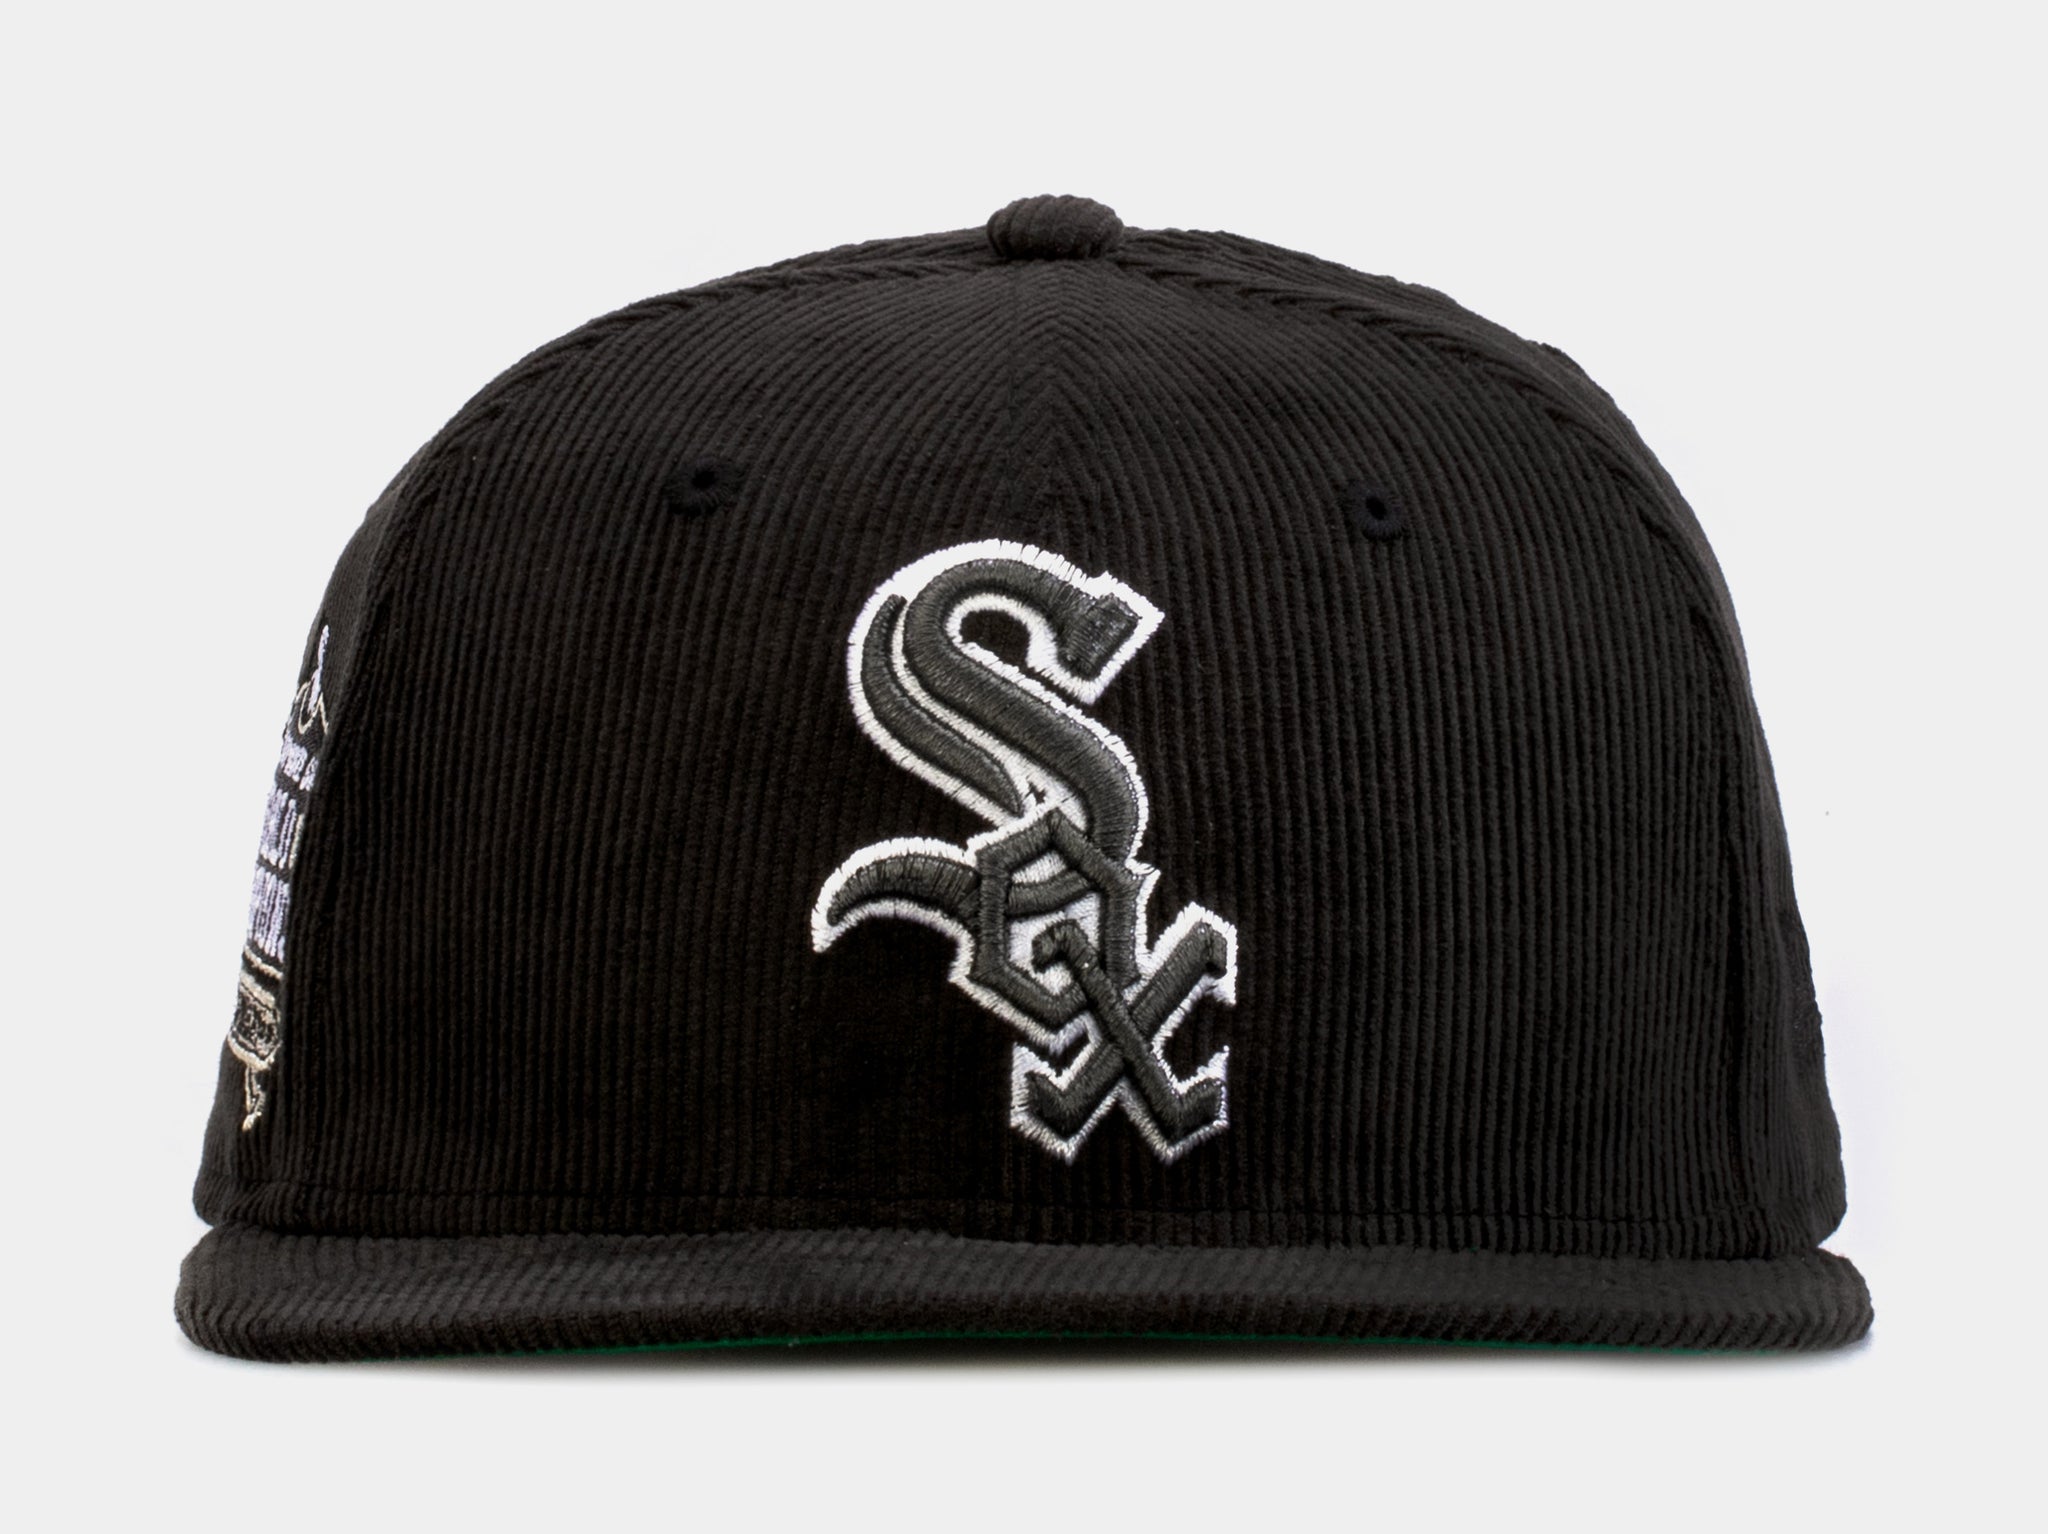  New Era 59Fifty mens Hat Chicago White Sox Basic